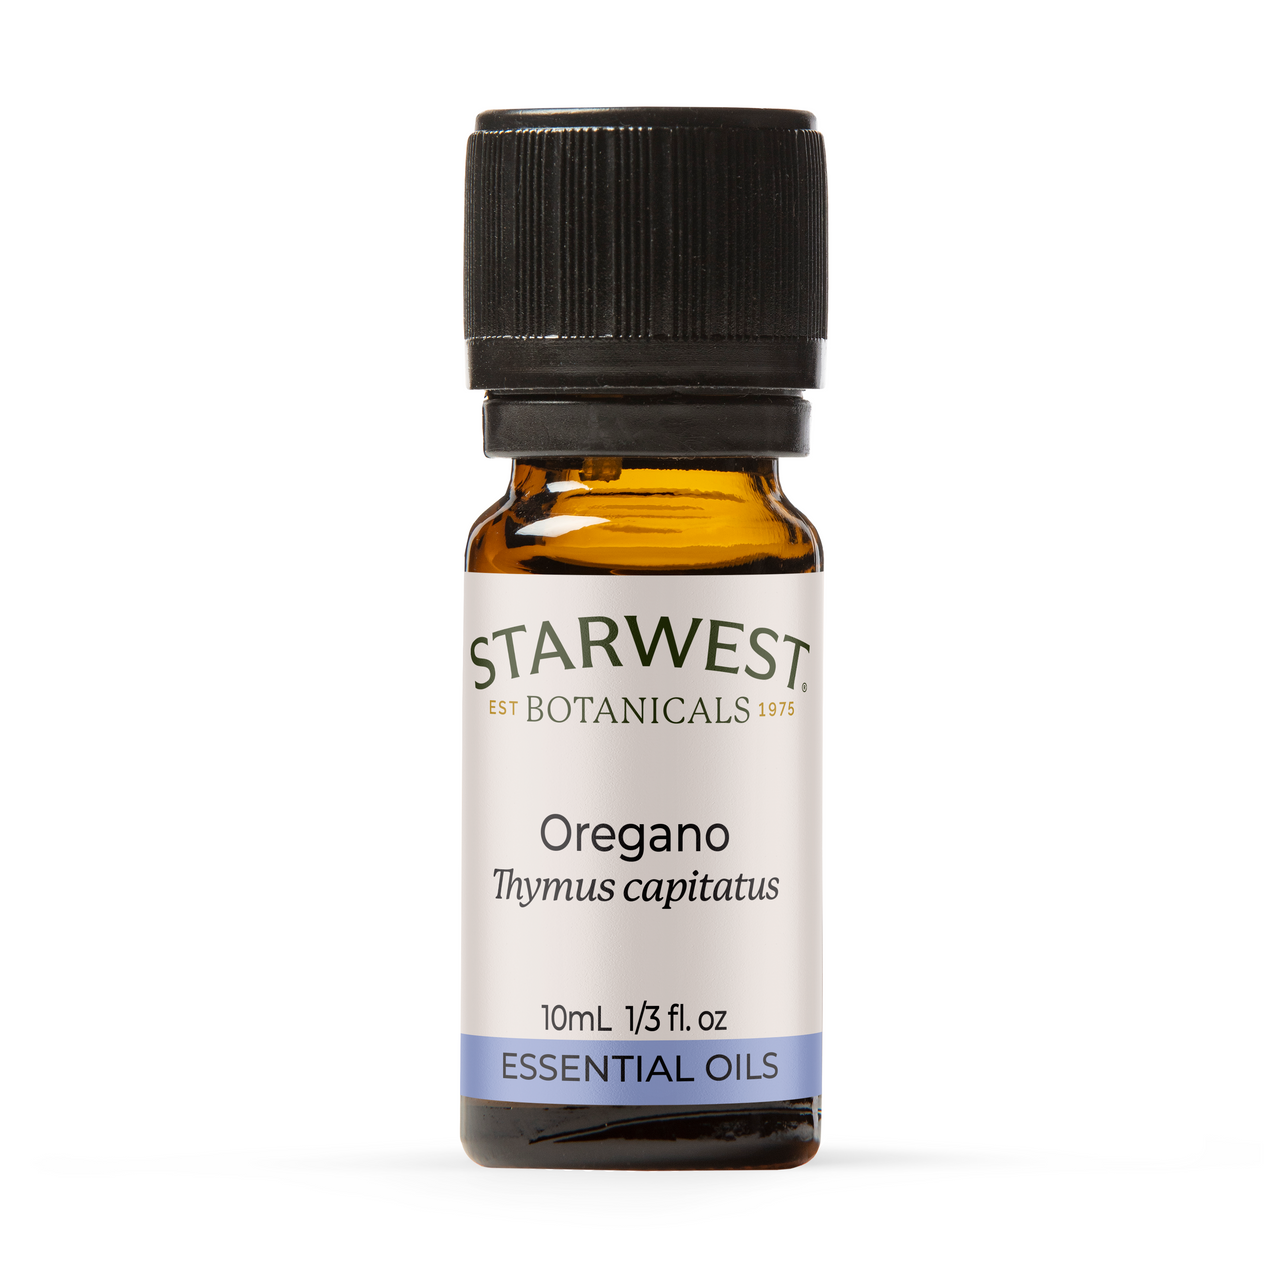 Starwest Oregano Essential Oil 1/3 fl oz